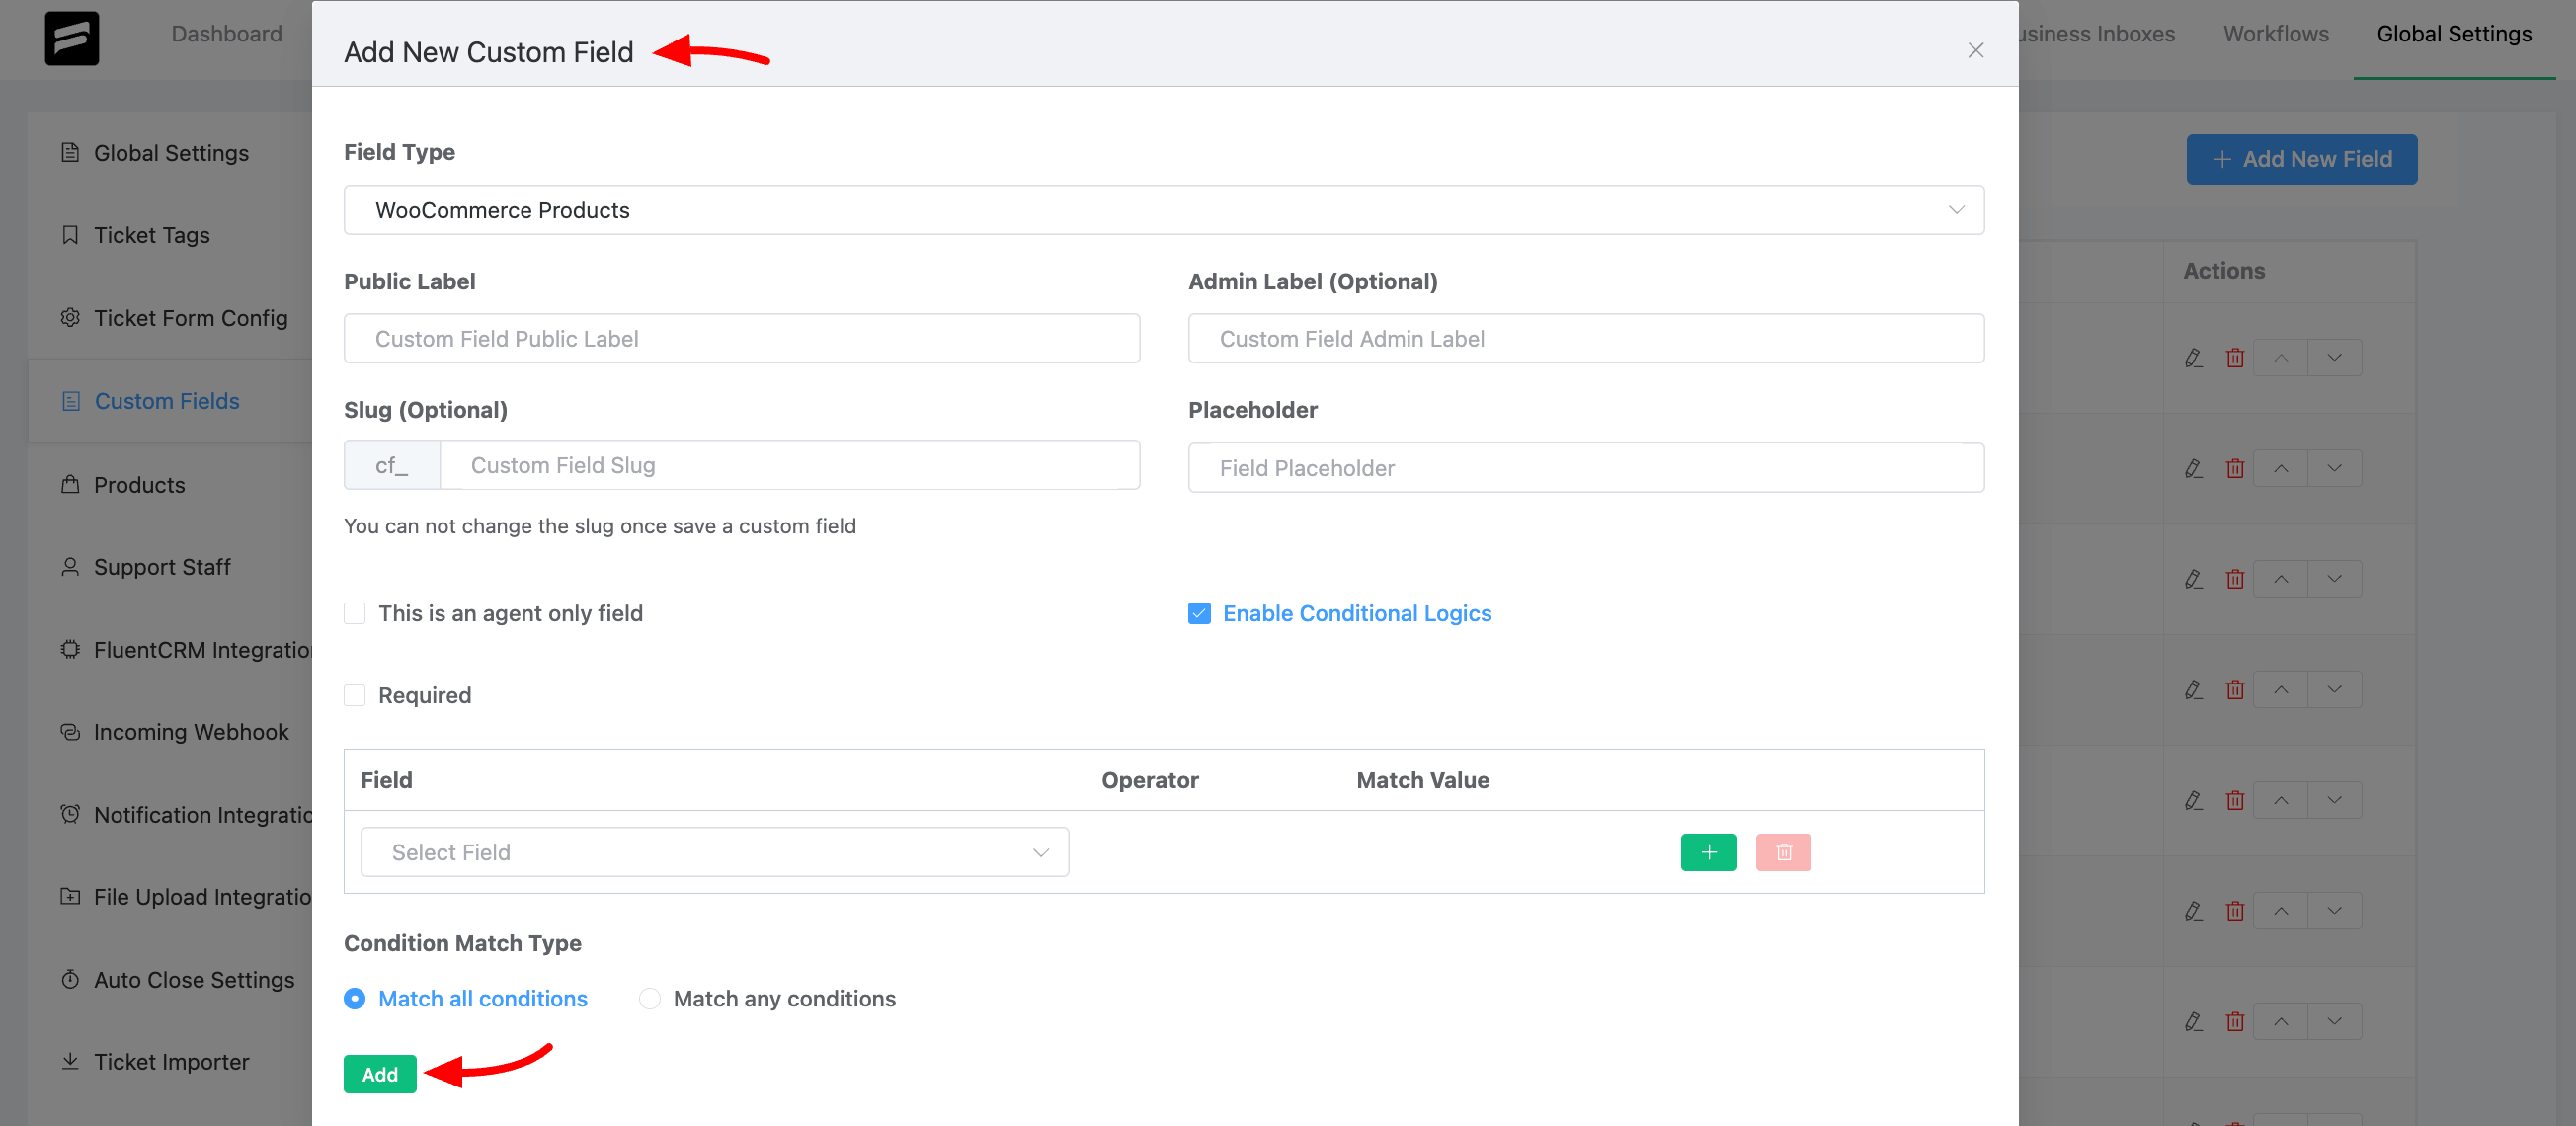 Add New Custom Field - Enter Details 